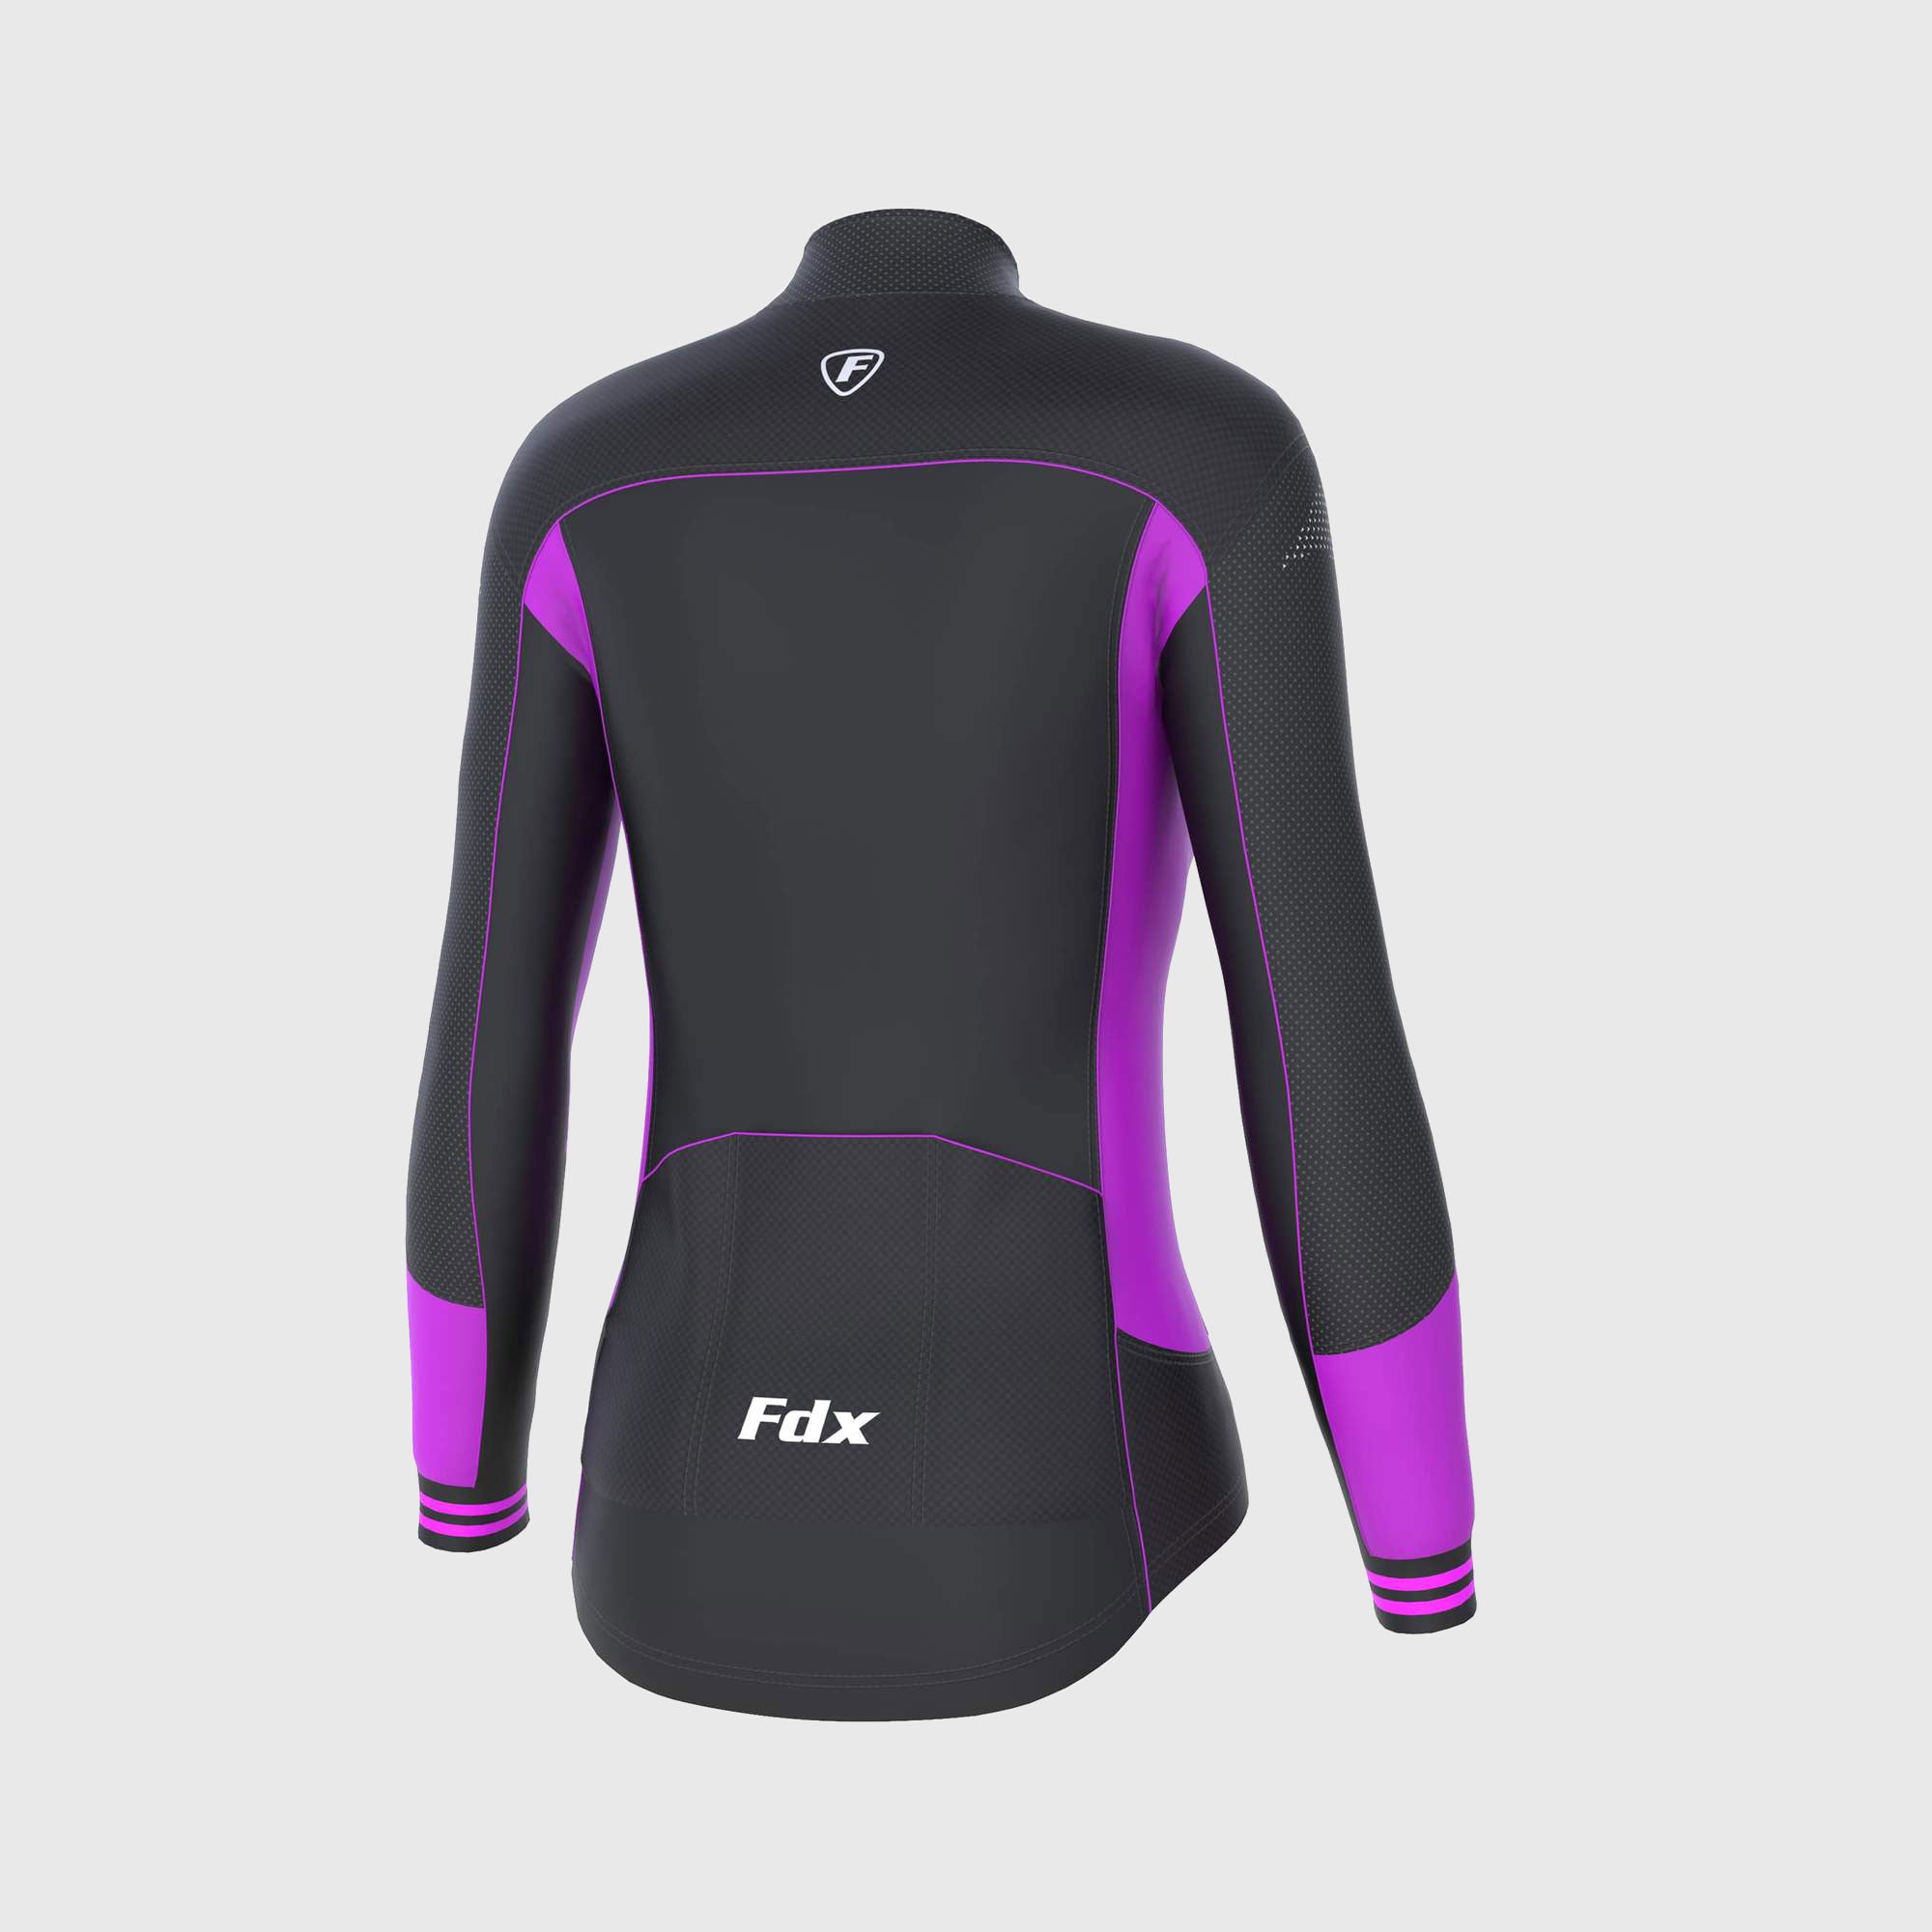 Fdx Thermodream Purple Women's Long Sleeve Winter Cycling Jersey